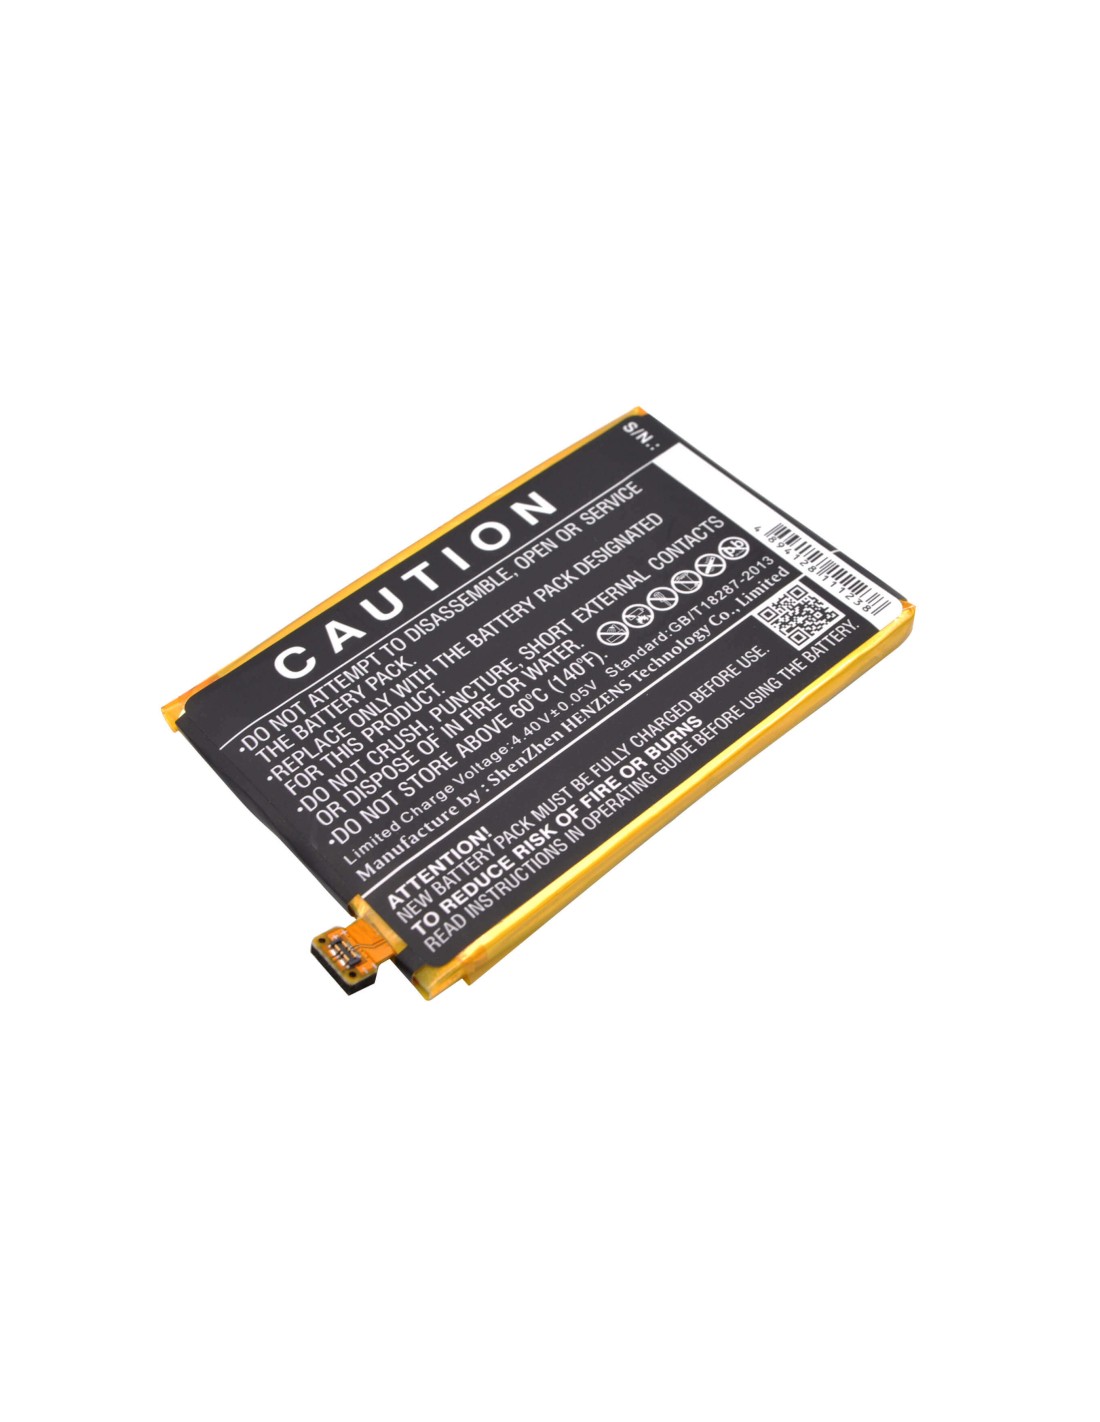 Battery for Asus Zenfone 2 Deluxe, ZE551ML, ZE550ML 3.85V, 2900mAh 11.17Wh